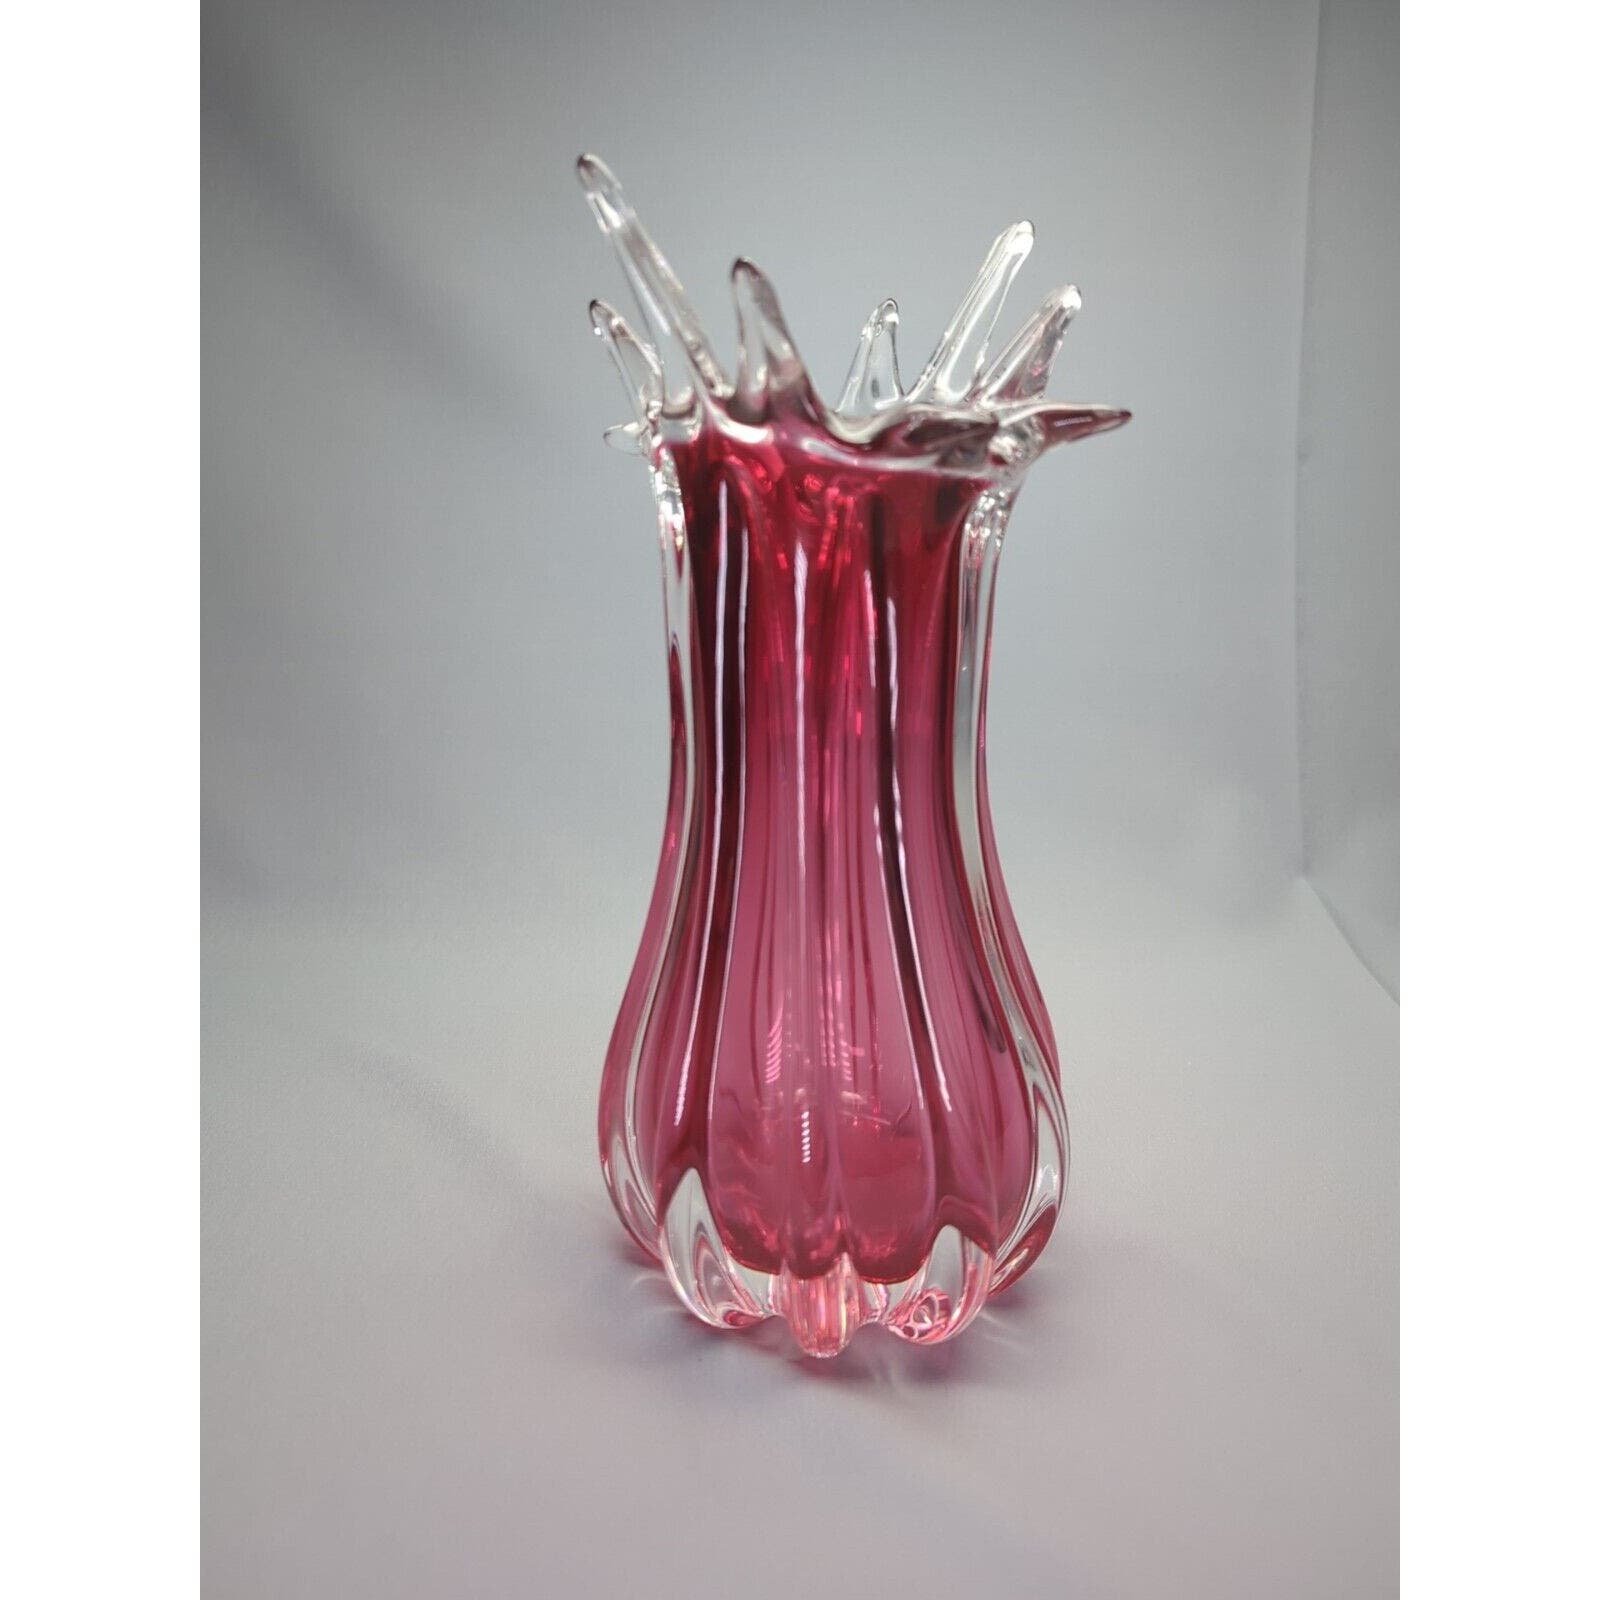 Chribska Handmade Glass 1414 Cranberry Red & Clear- 11.5